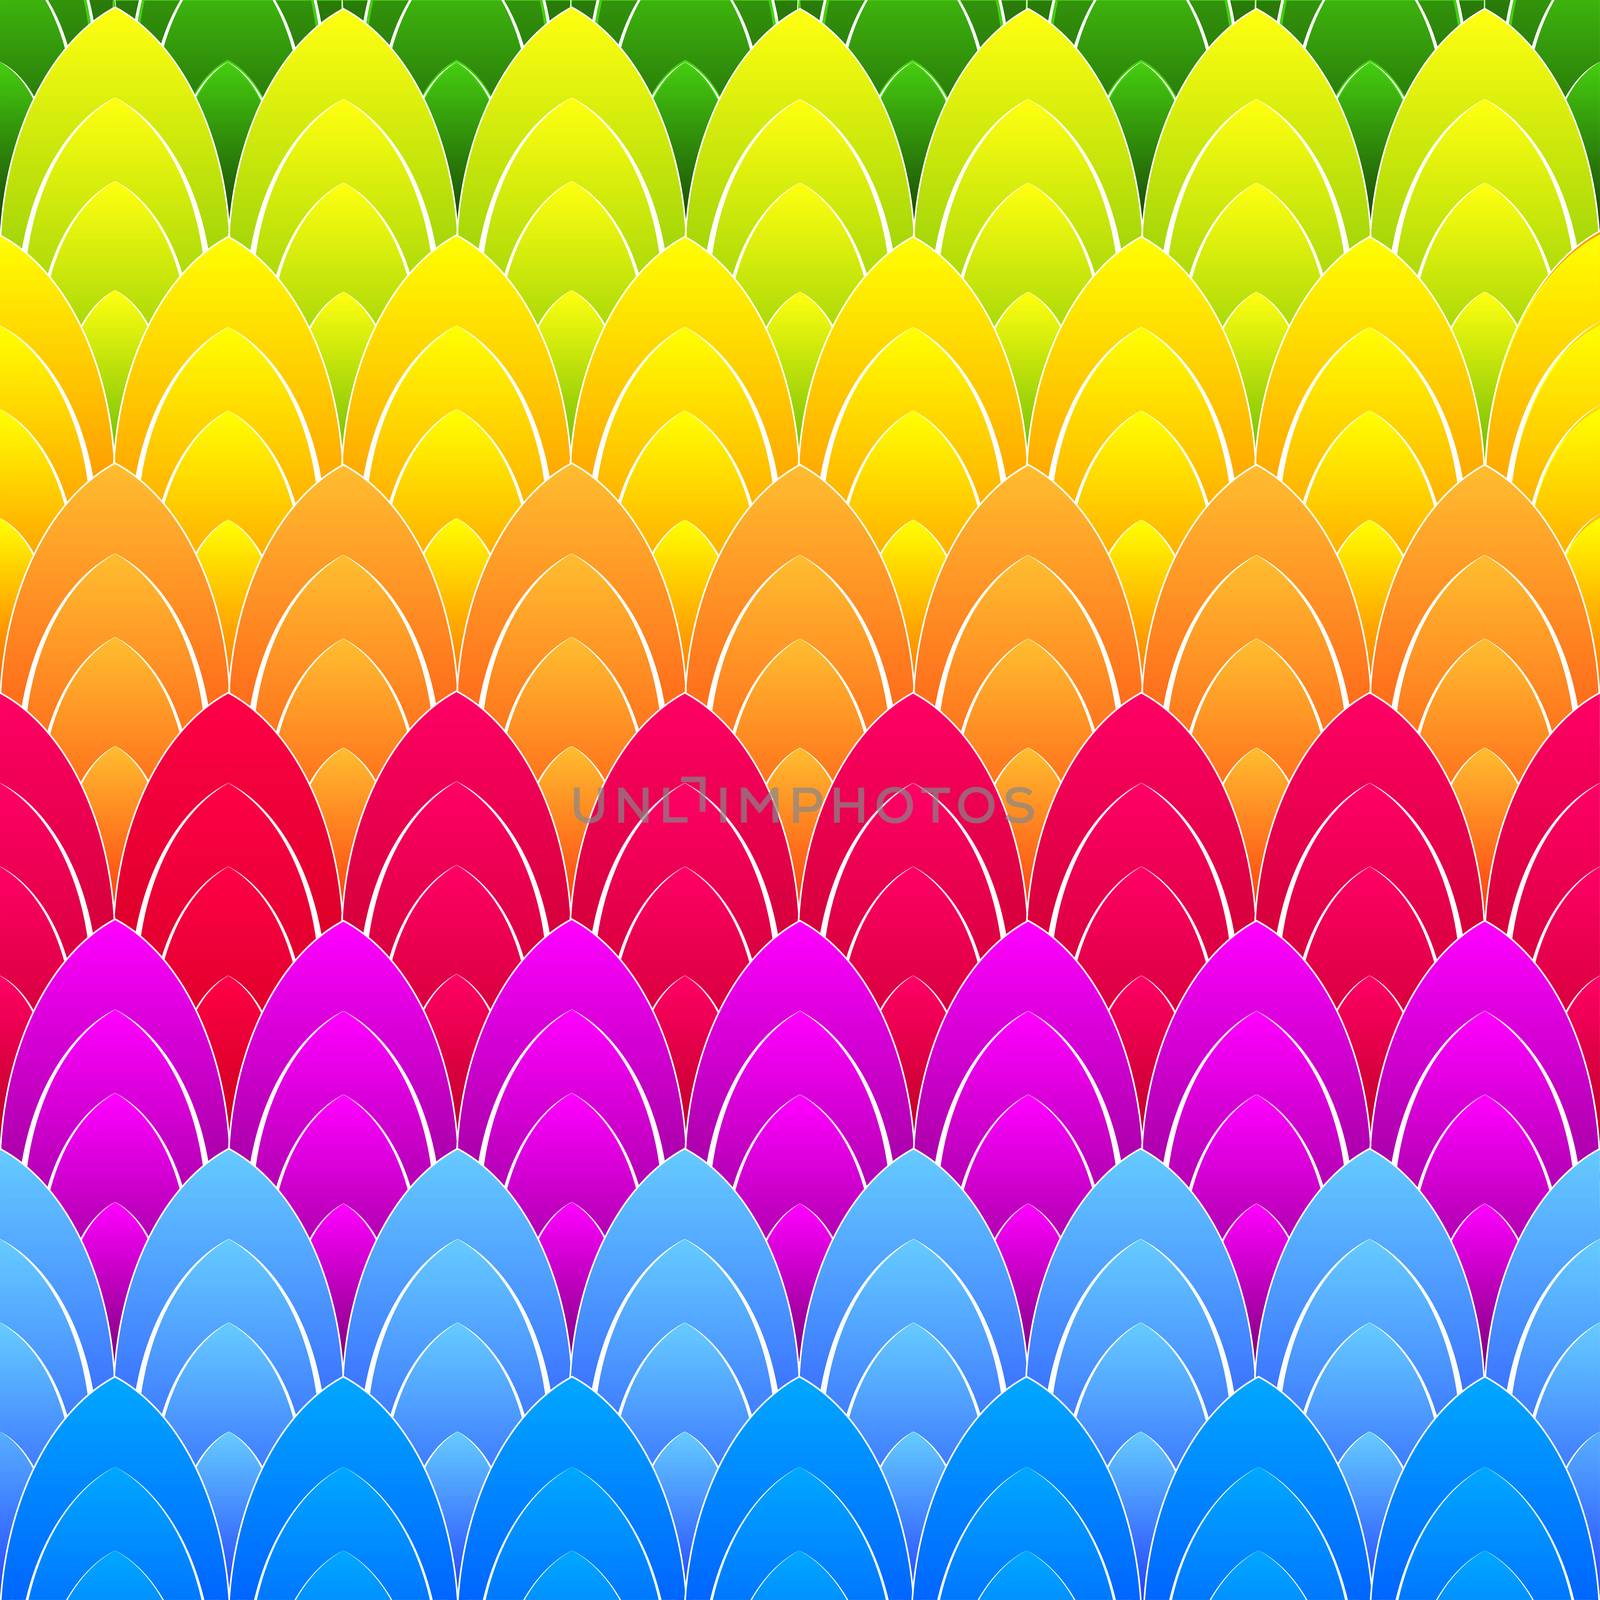 background with rainbow ellipses by marinini